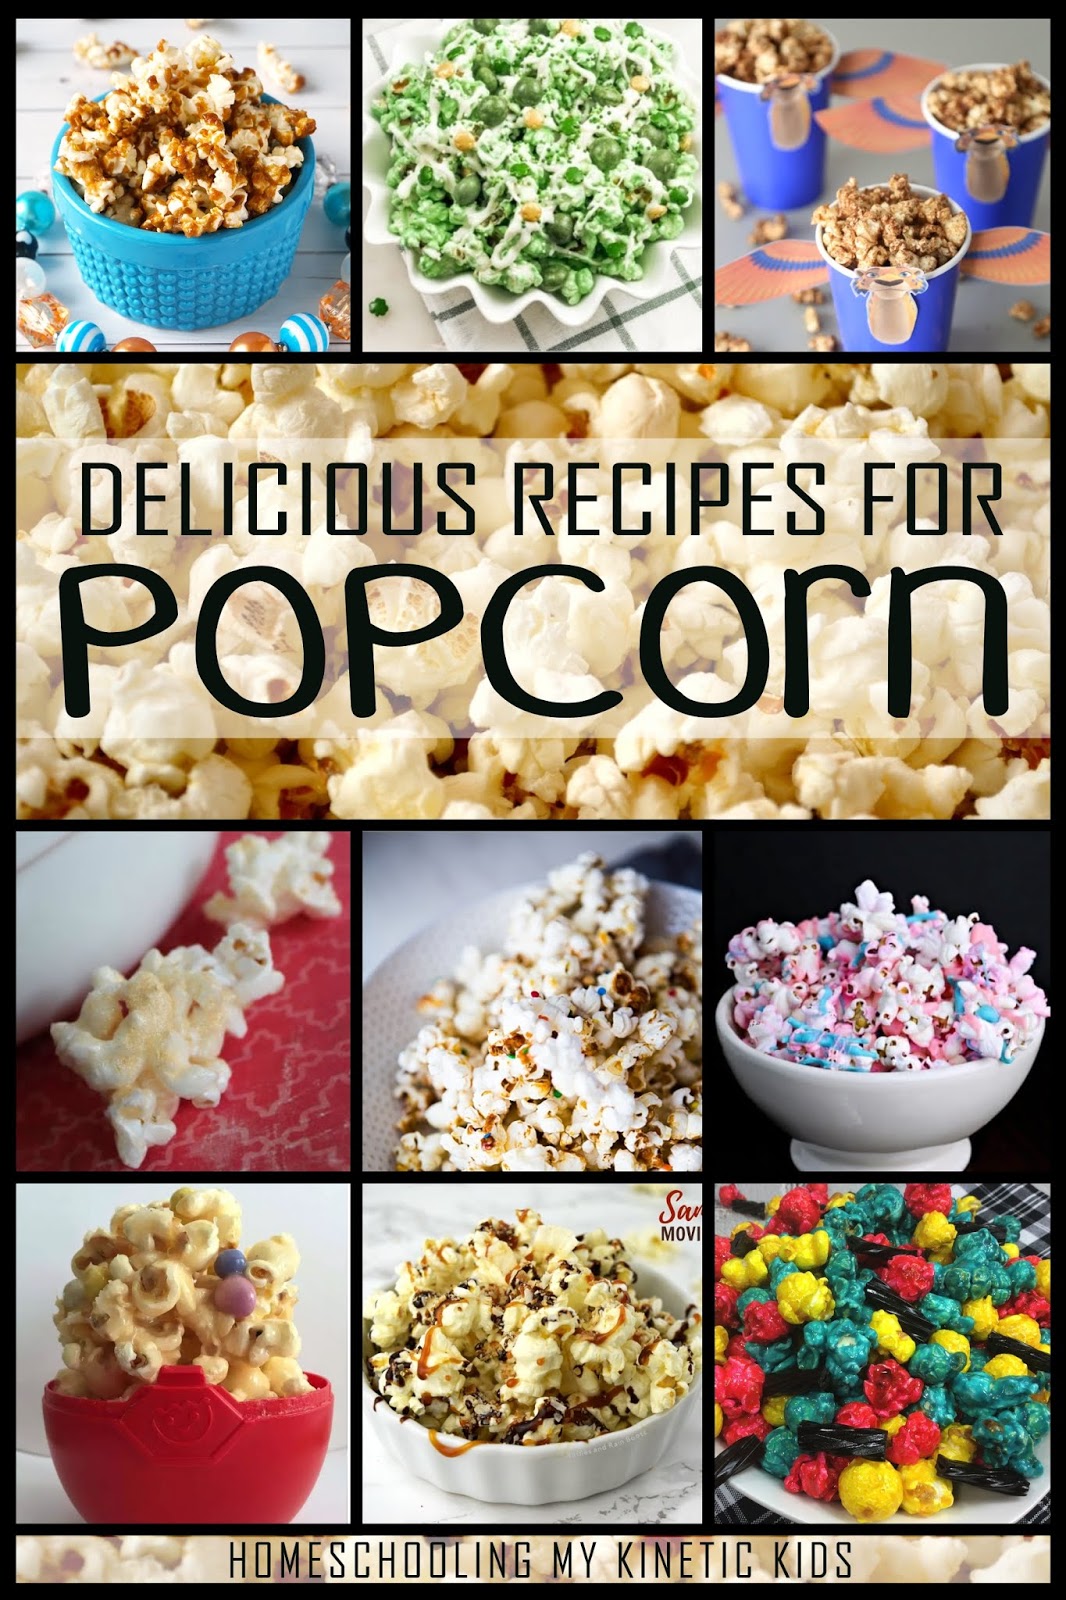 Delicious Popcorn Recipes for Family Movie Night